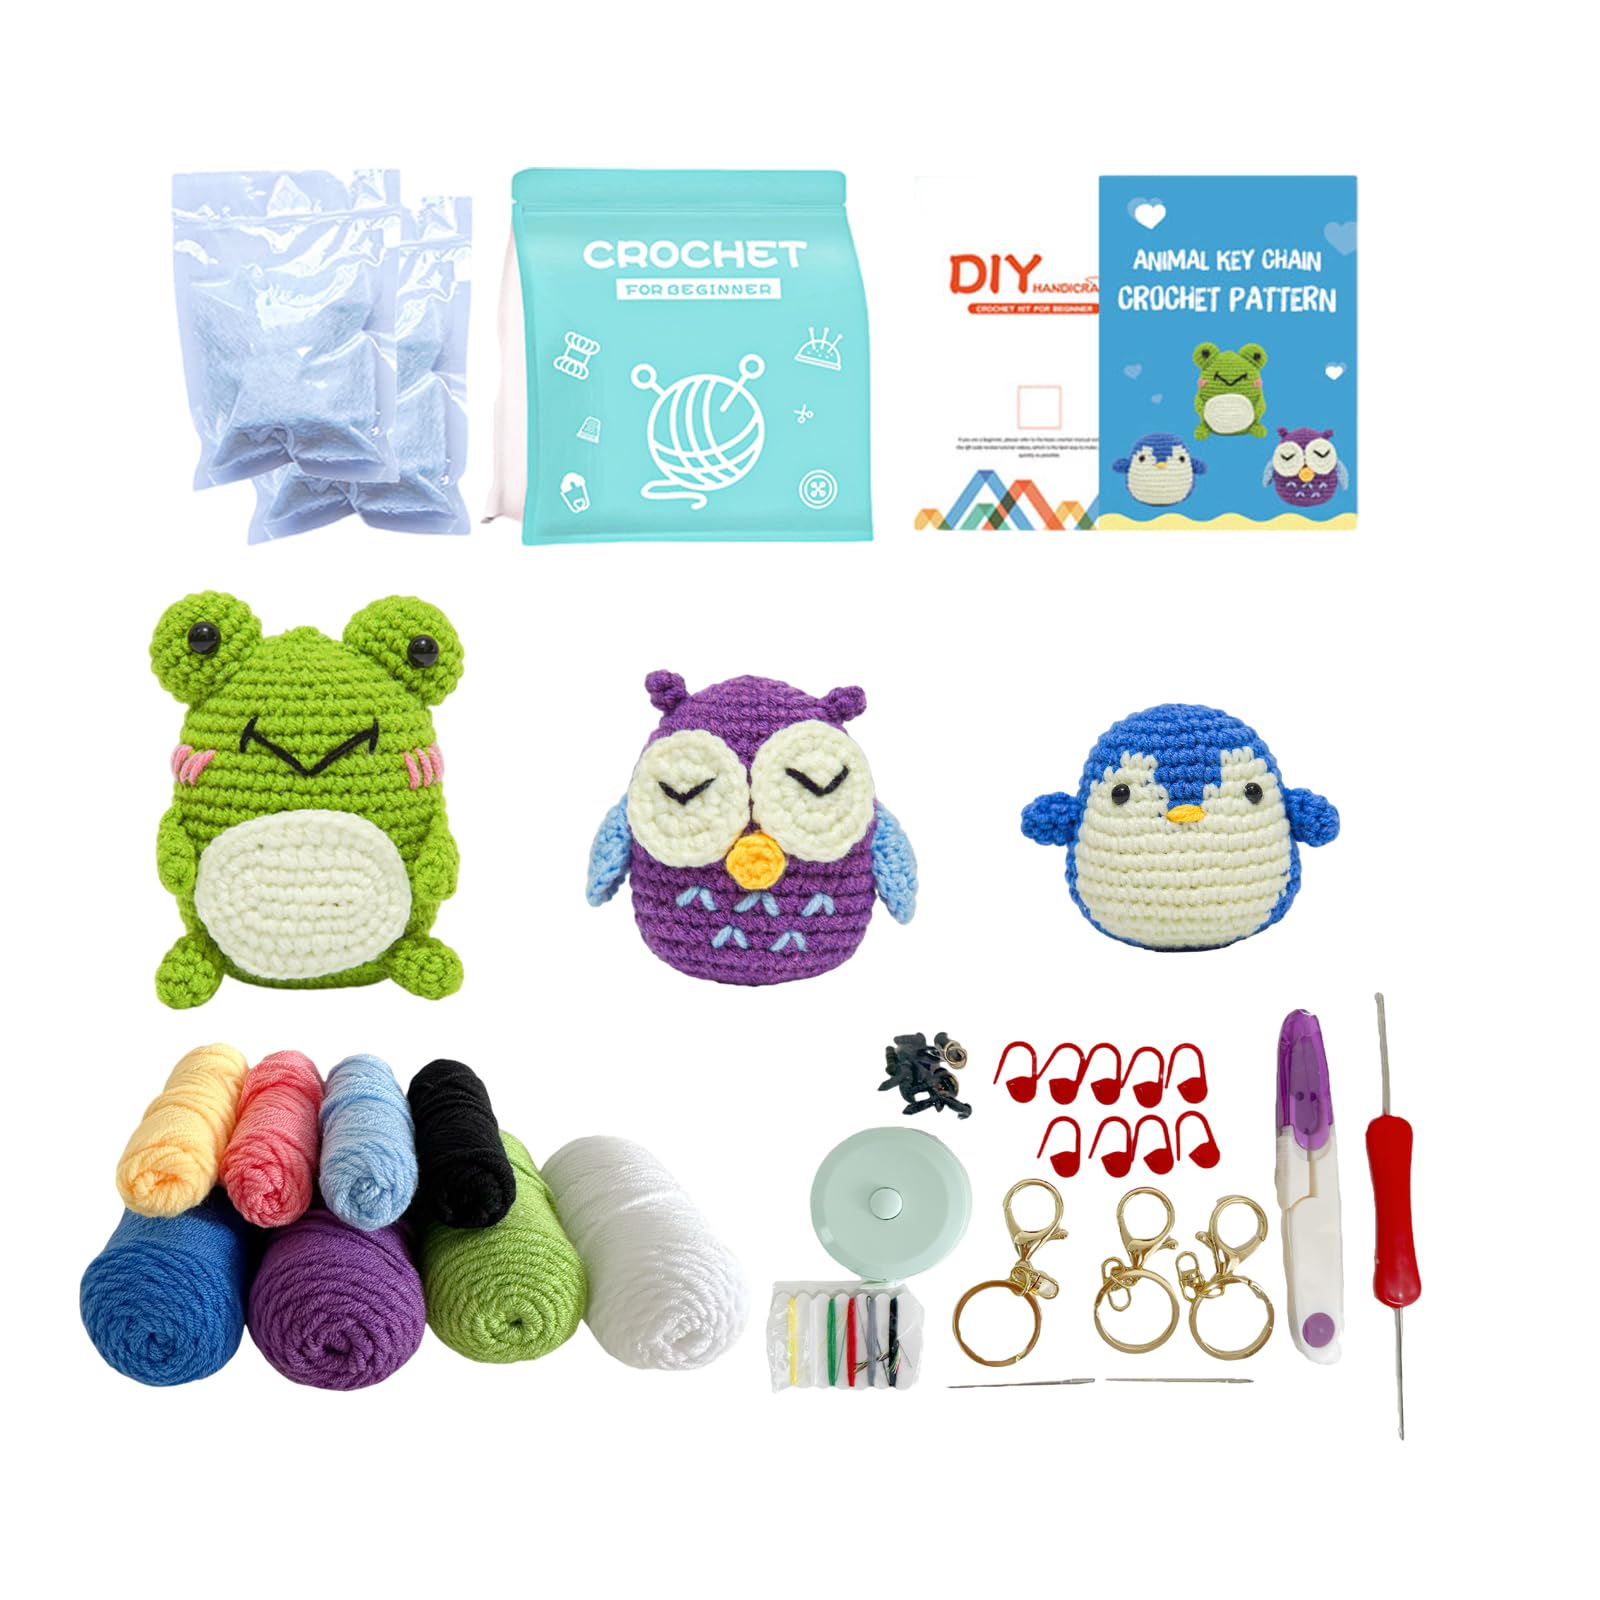 NEZIH Crochet Kit for Beginners,Beginner Crochet Kit for Adults & Kids,Complete Beginner Crochet Set with Step-by-Step Video Tutorials,3 Pattern